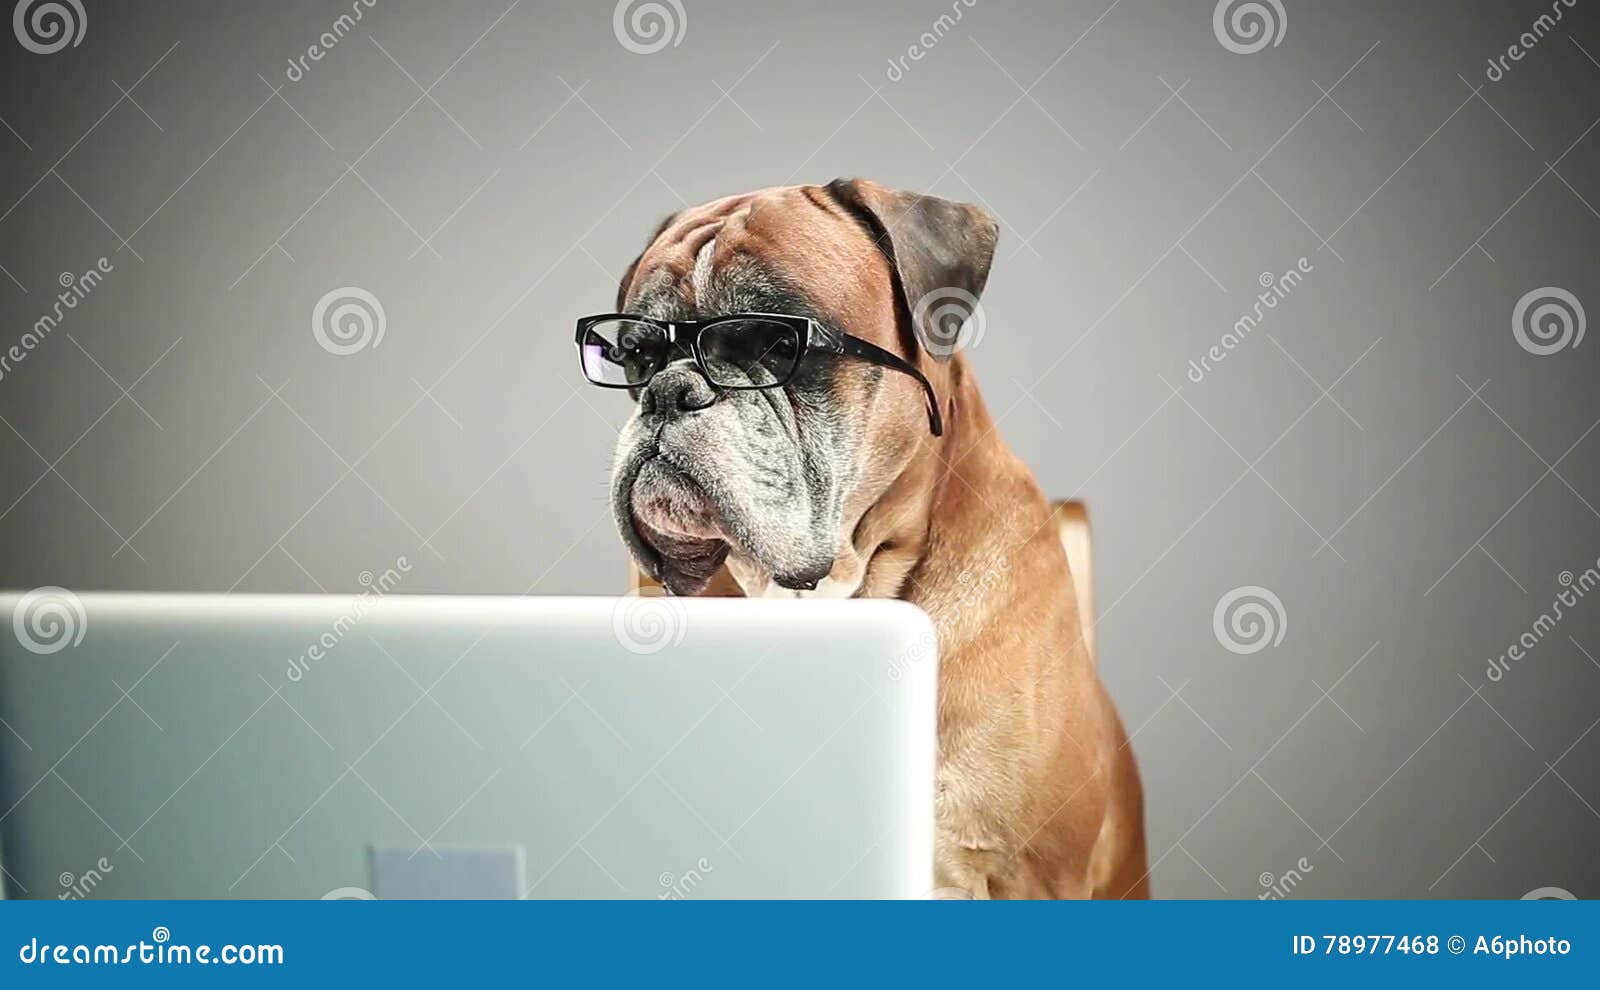 boxer-dog-eyeglasses-working-laptop-looking-sth-78977468.jpg